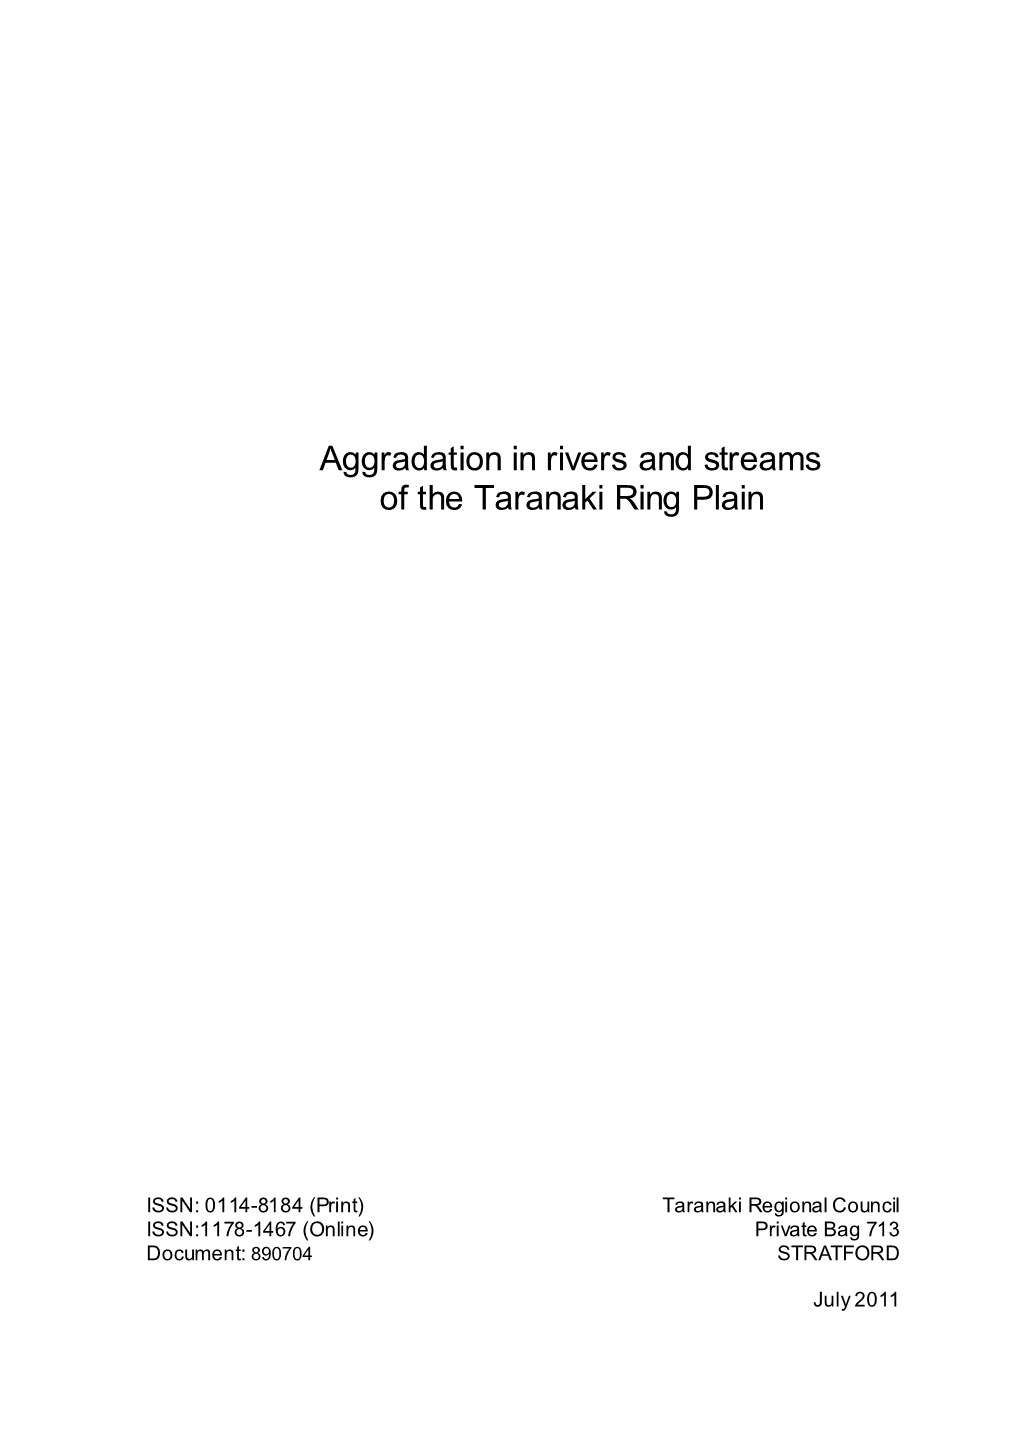 Aggradation in Rivers and Streams of the Taranaki Ring Plain